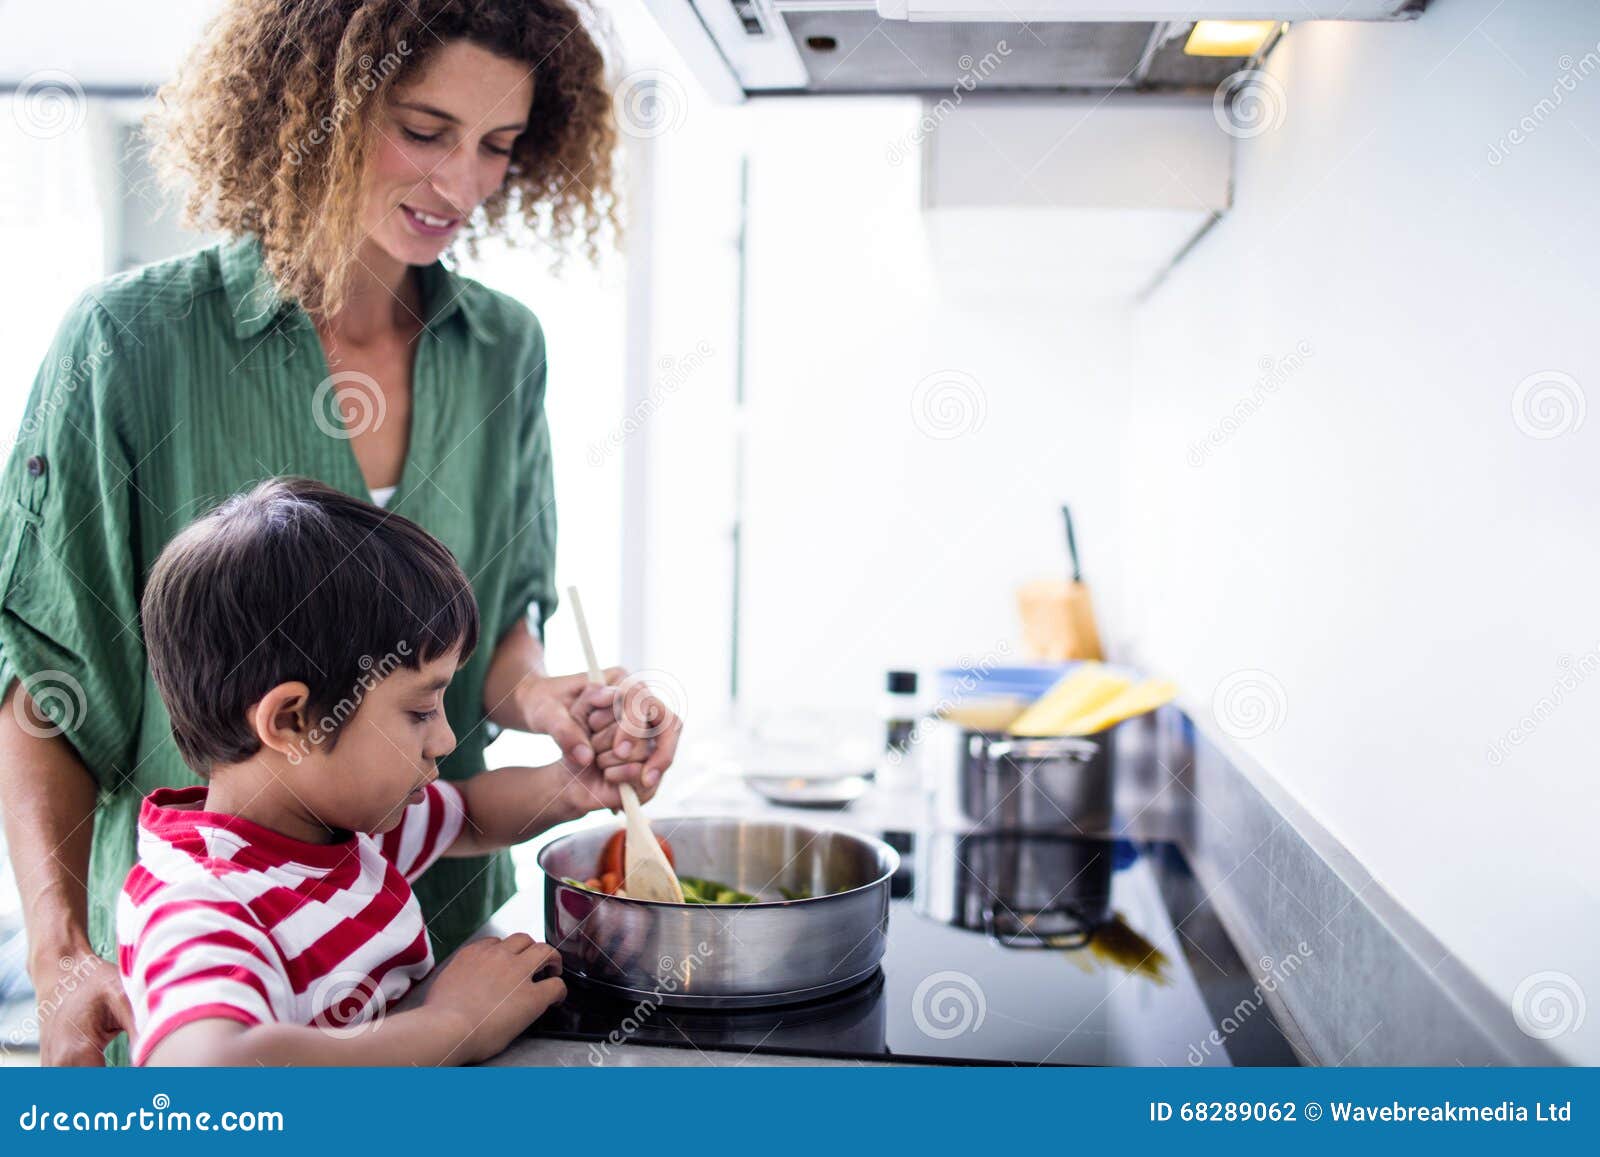 Мама с сыном русская кухня. Семья на кухне. Счастливая семья на кухне. Мама с ребенком на кухне. Мать и сын готовят.